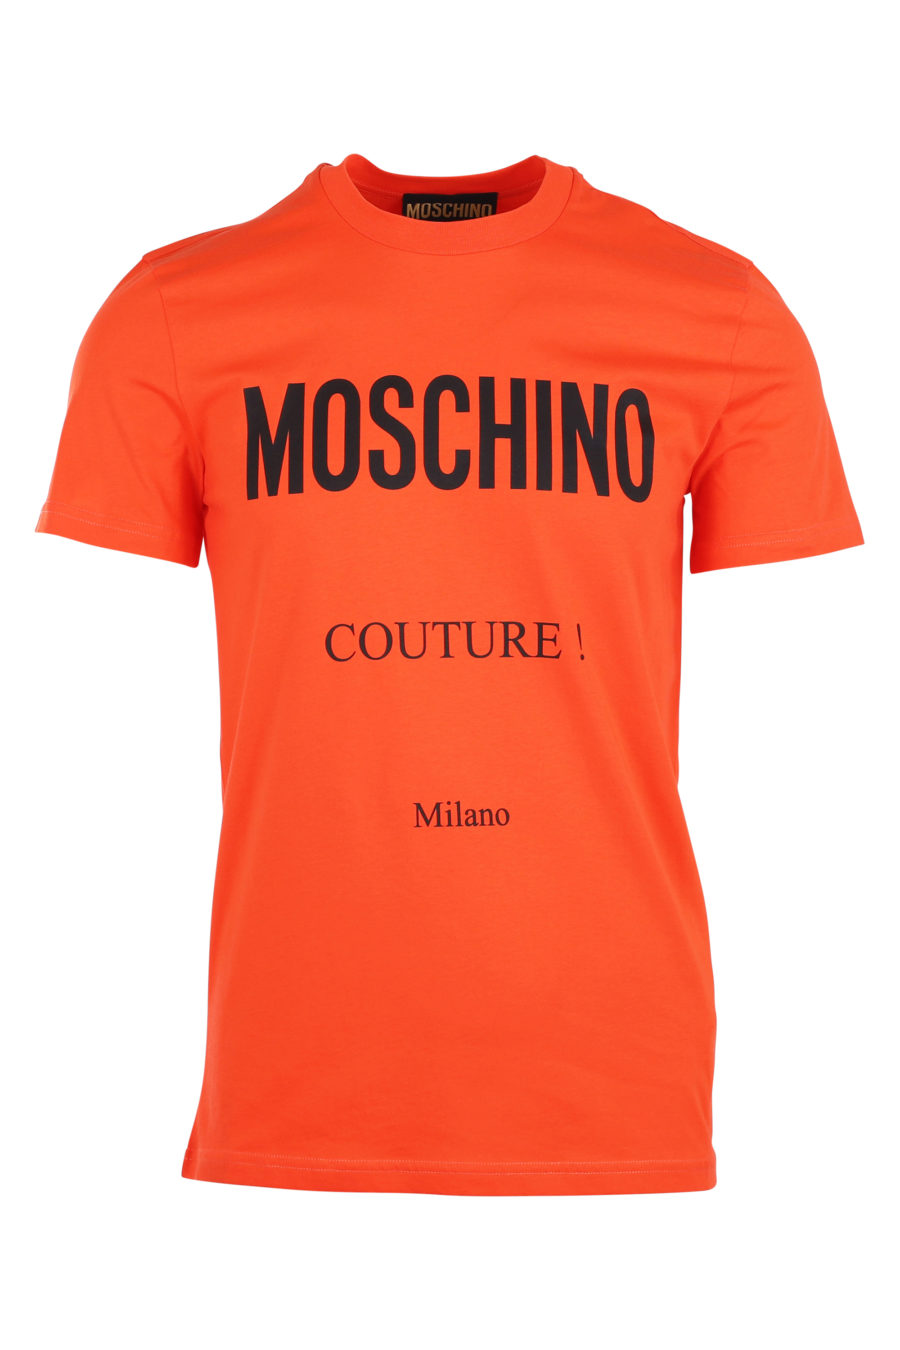 T-shirt orange avec logo milano "fantasy" - IMG 9941